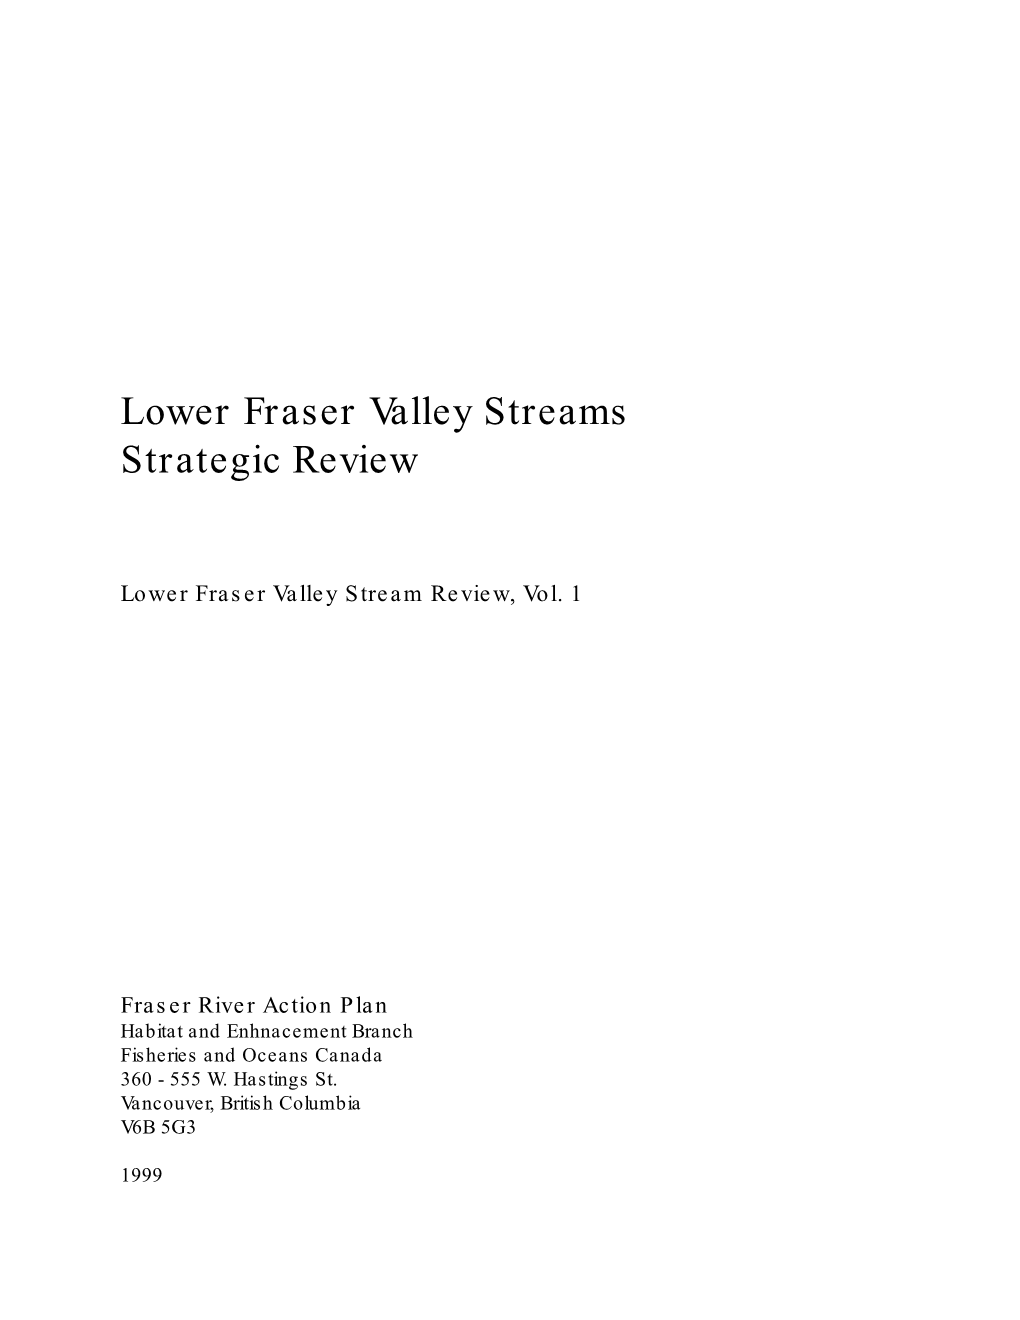 Lower Fraser Valley Streams Strategic Review